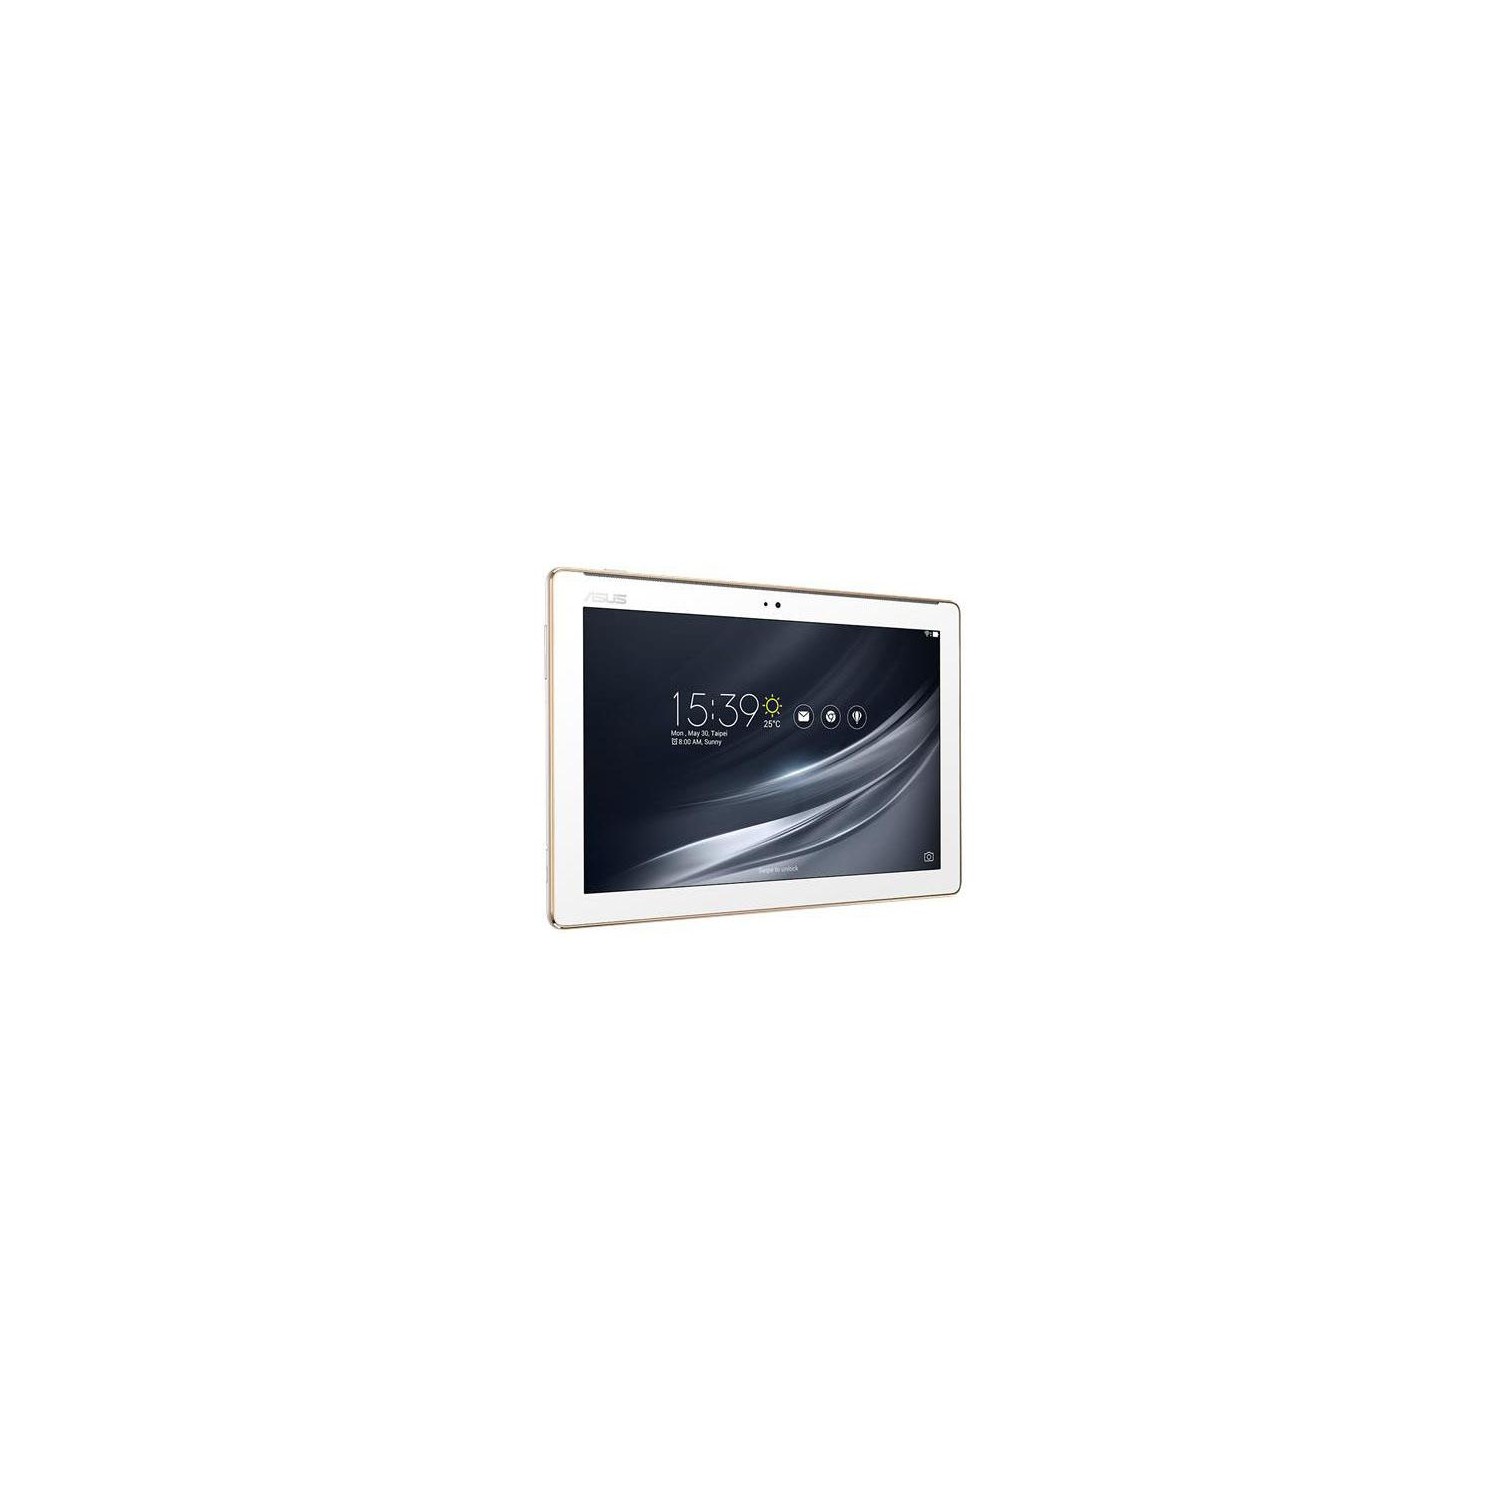 ASUS Z301MF-A2-WH ZenPad 10 10.1-inch IPS WXGA (1280x800) FHD Tablet